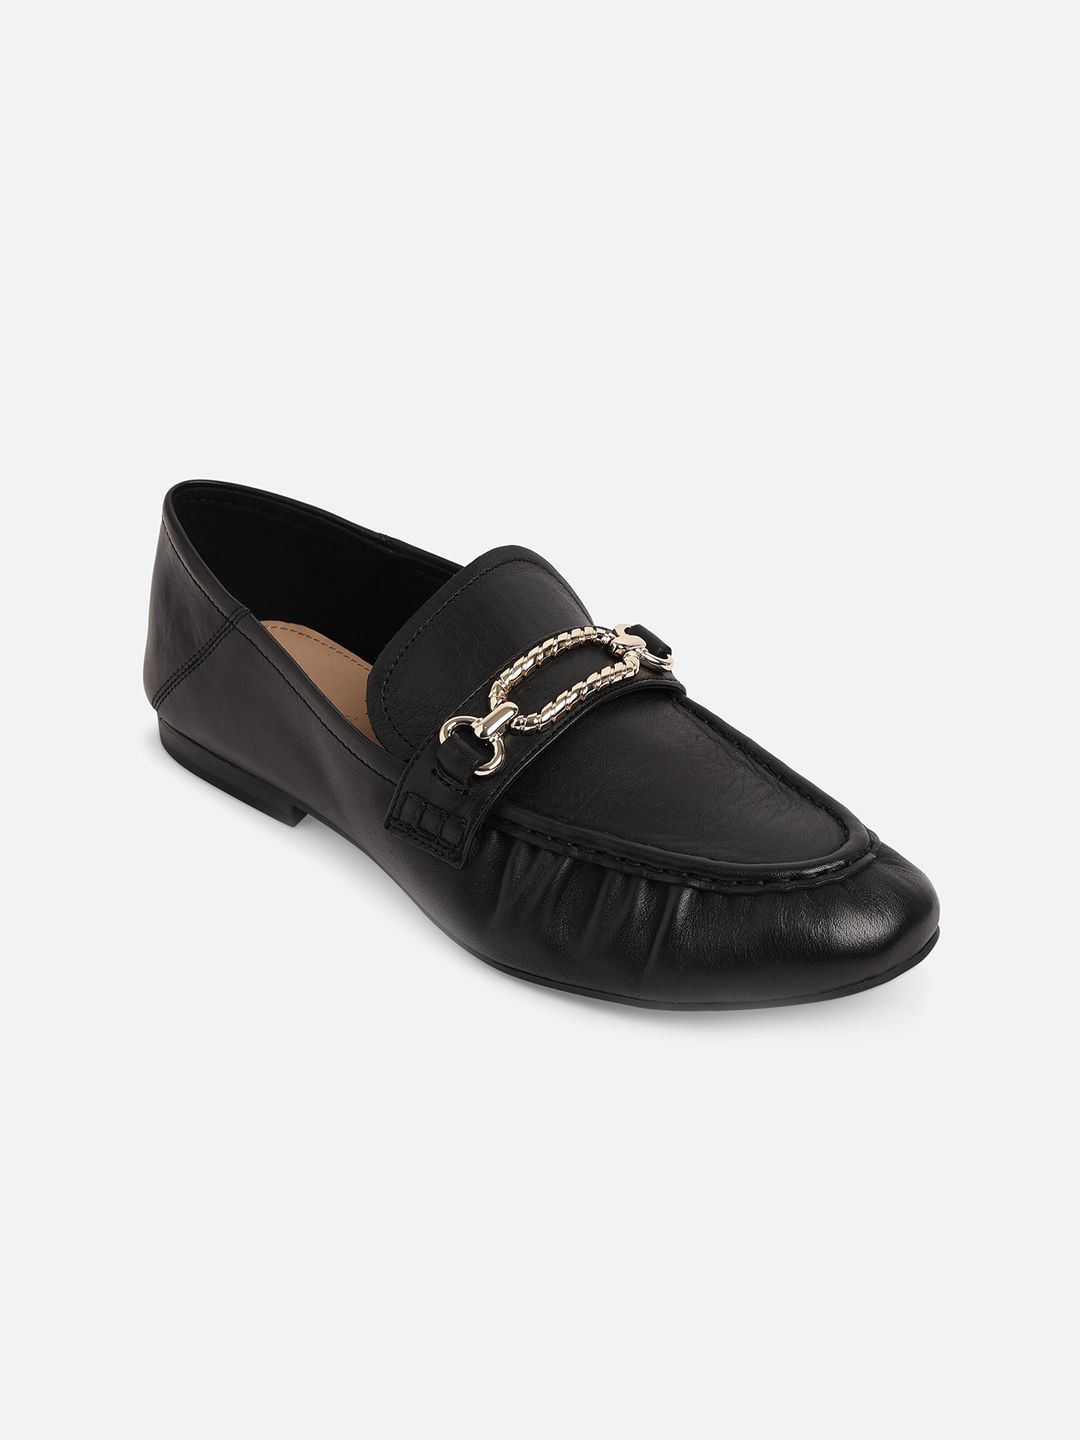 ALDO Women Black Leather Loafers Price in India